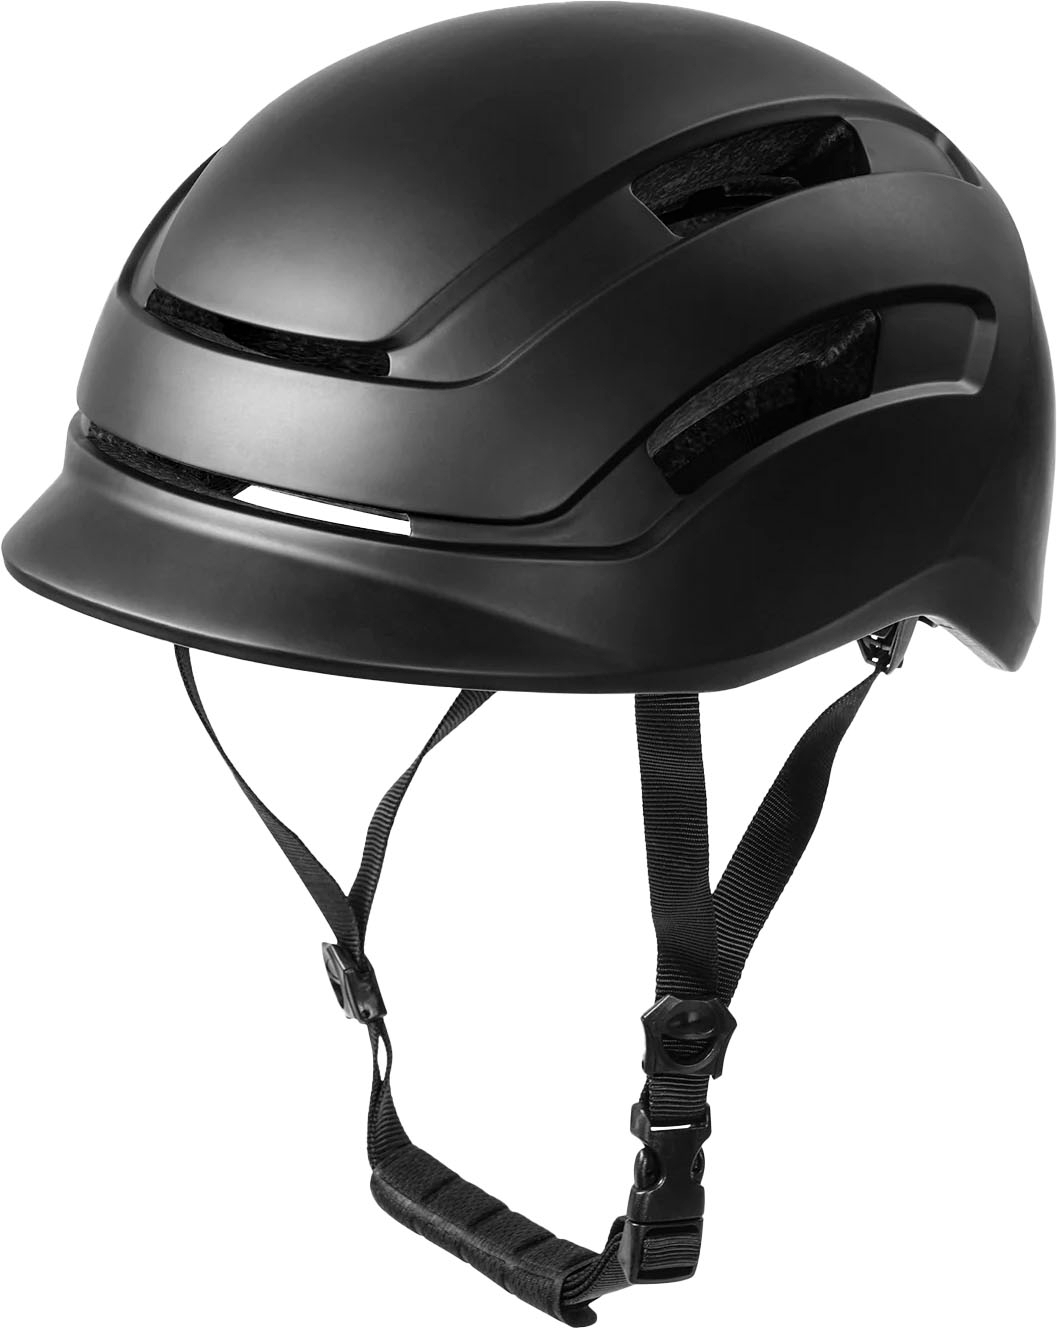 NIU Electric Scooter Helmet with LED Light Black 5K3G5L17J